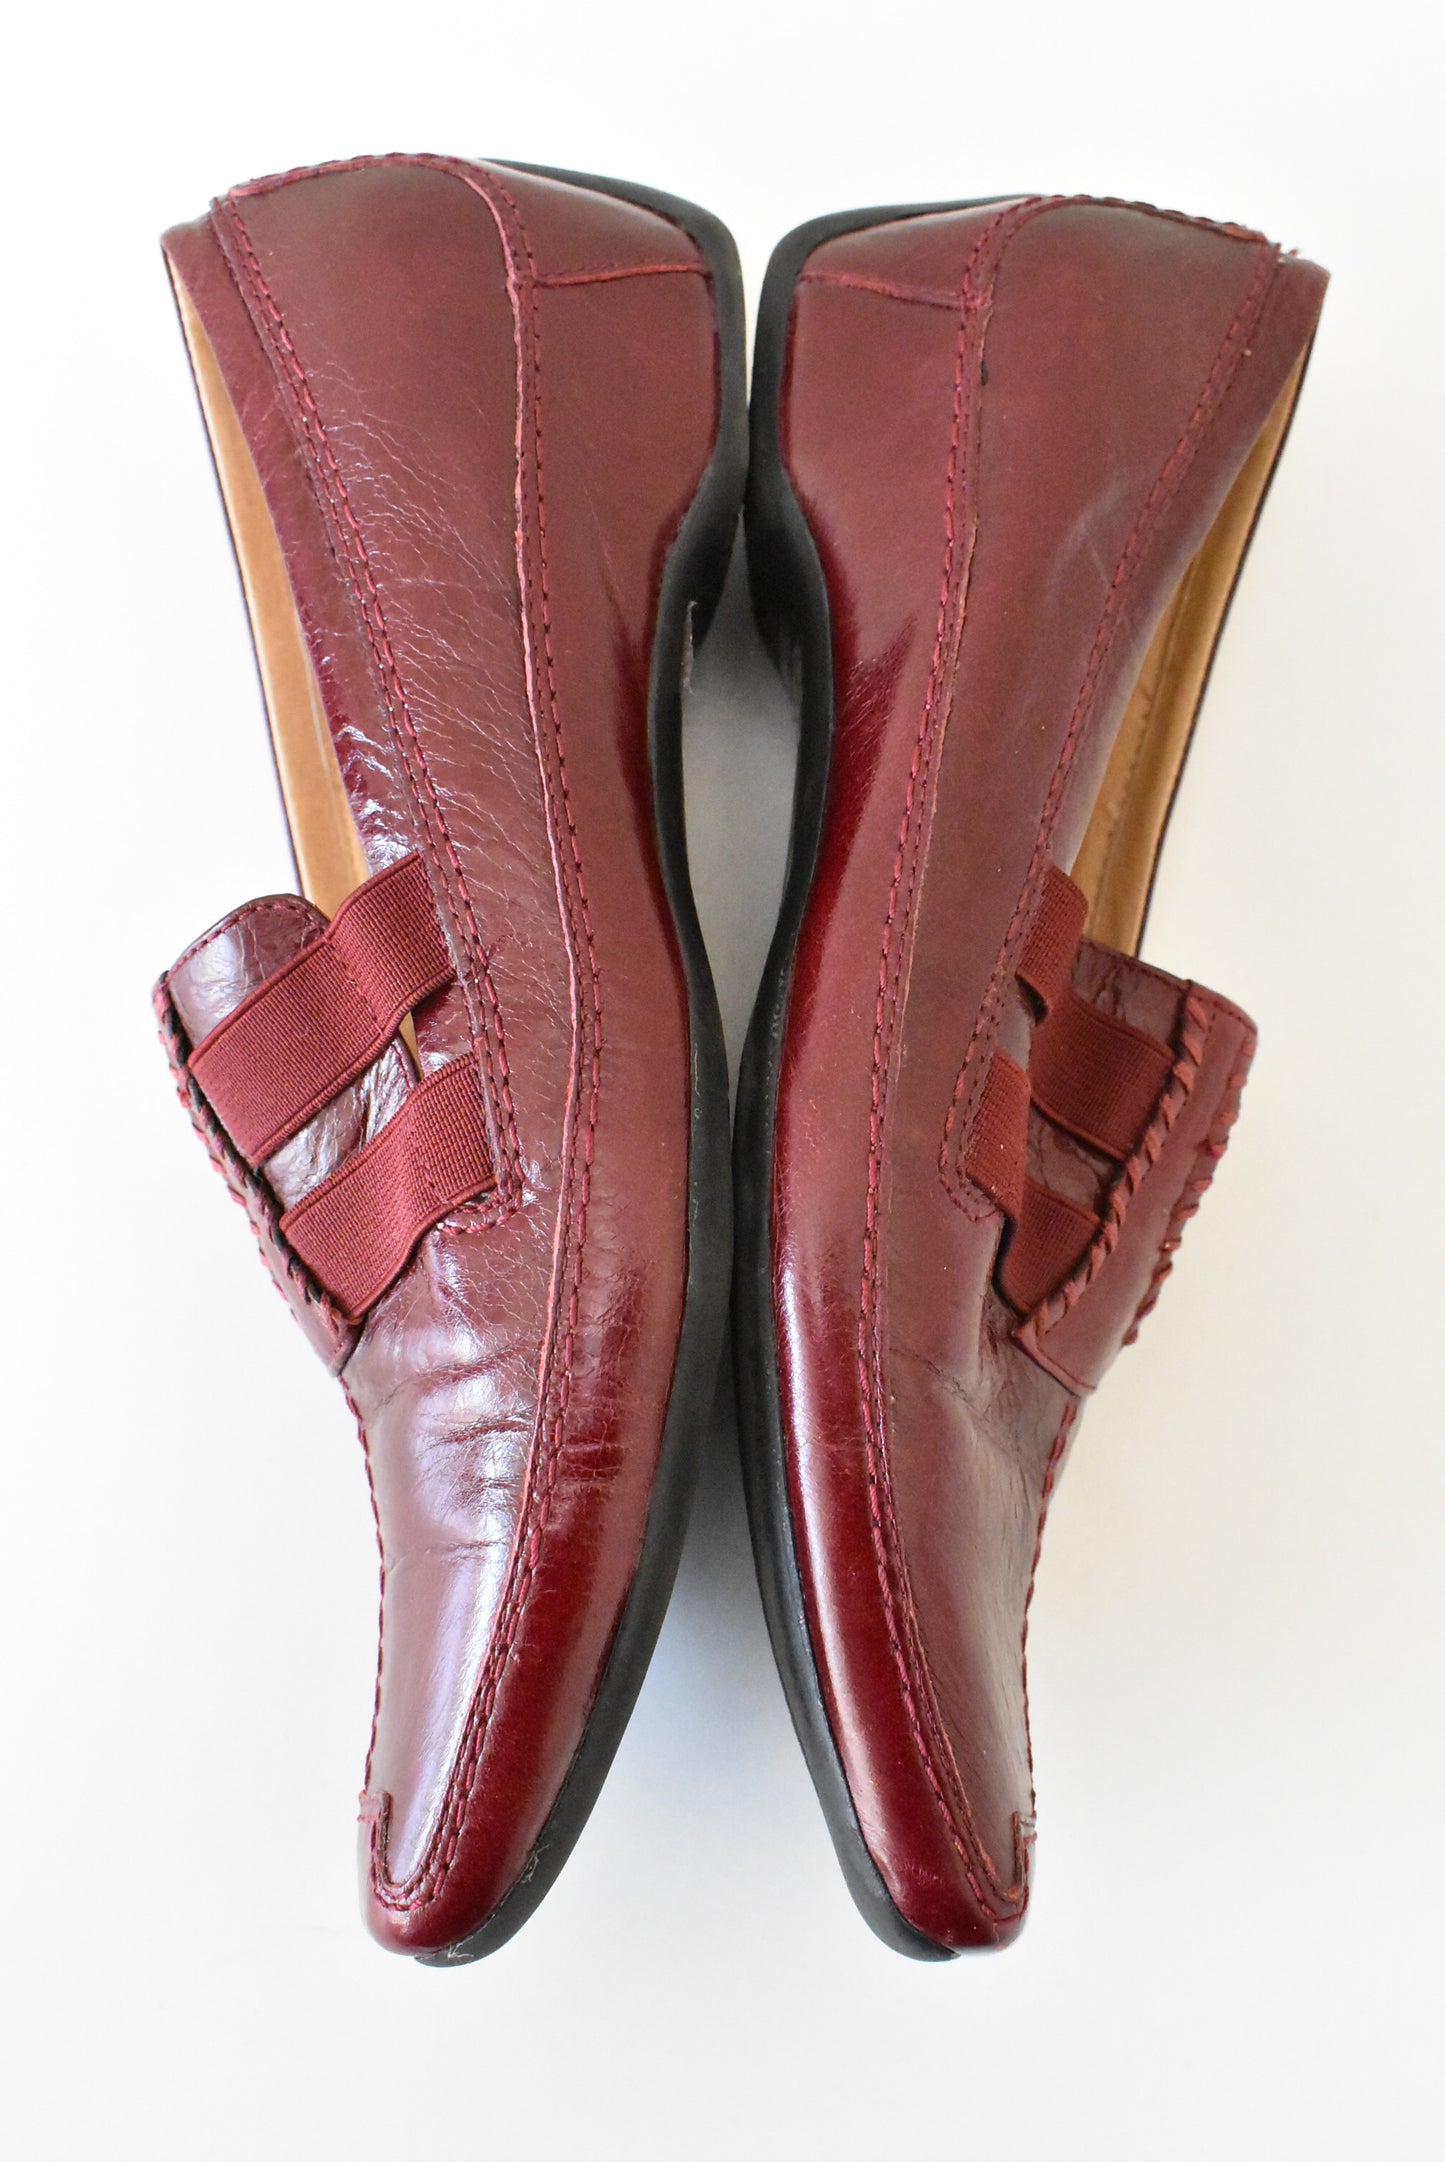 Bresley maroon slip on shoes, 39